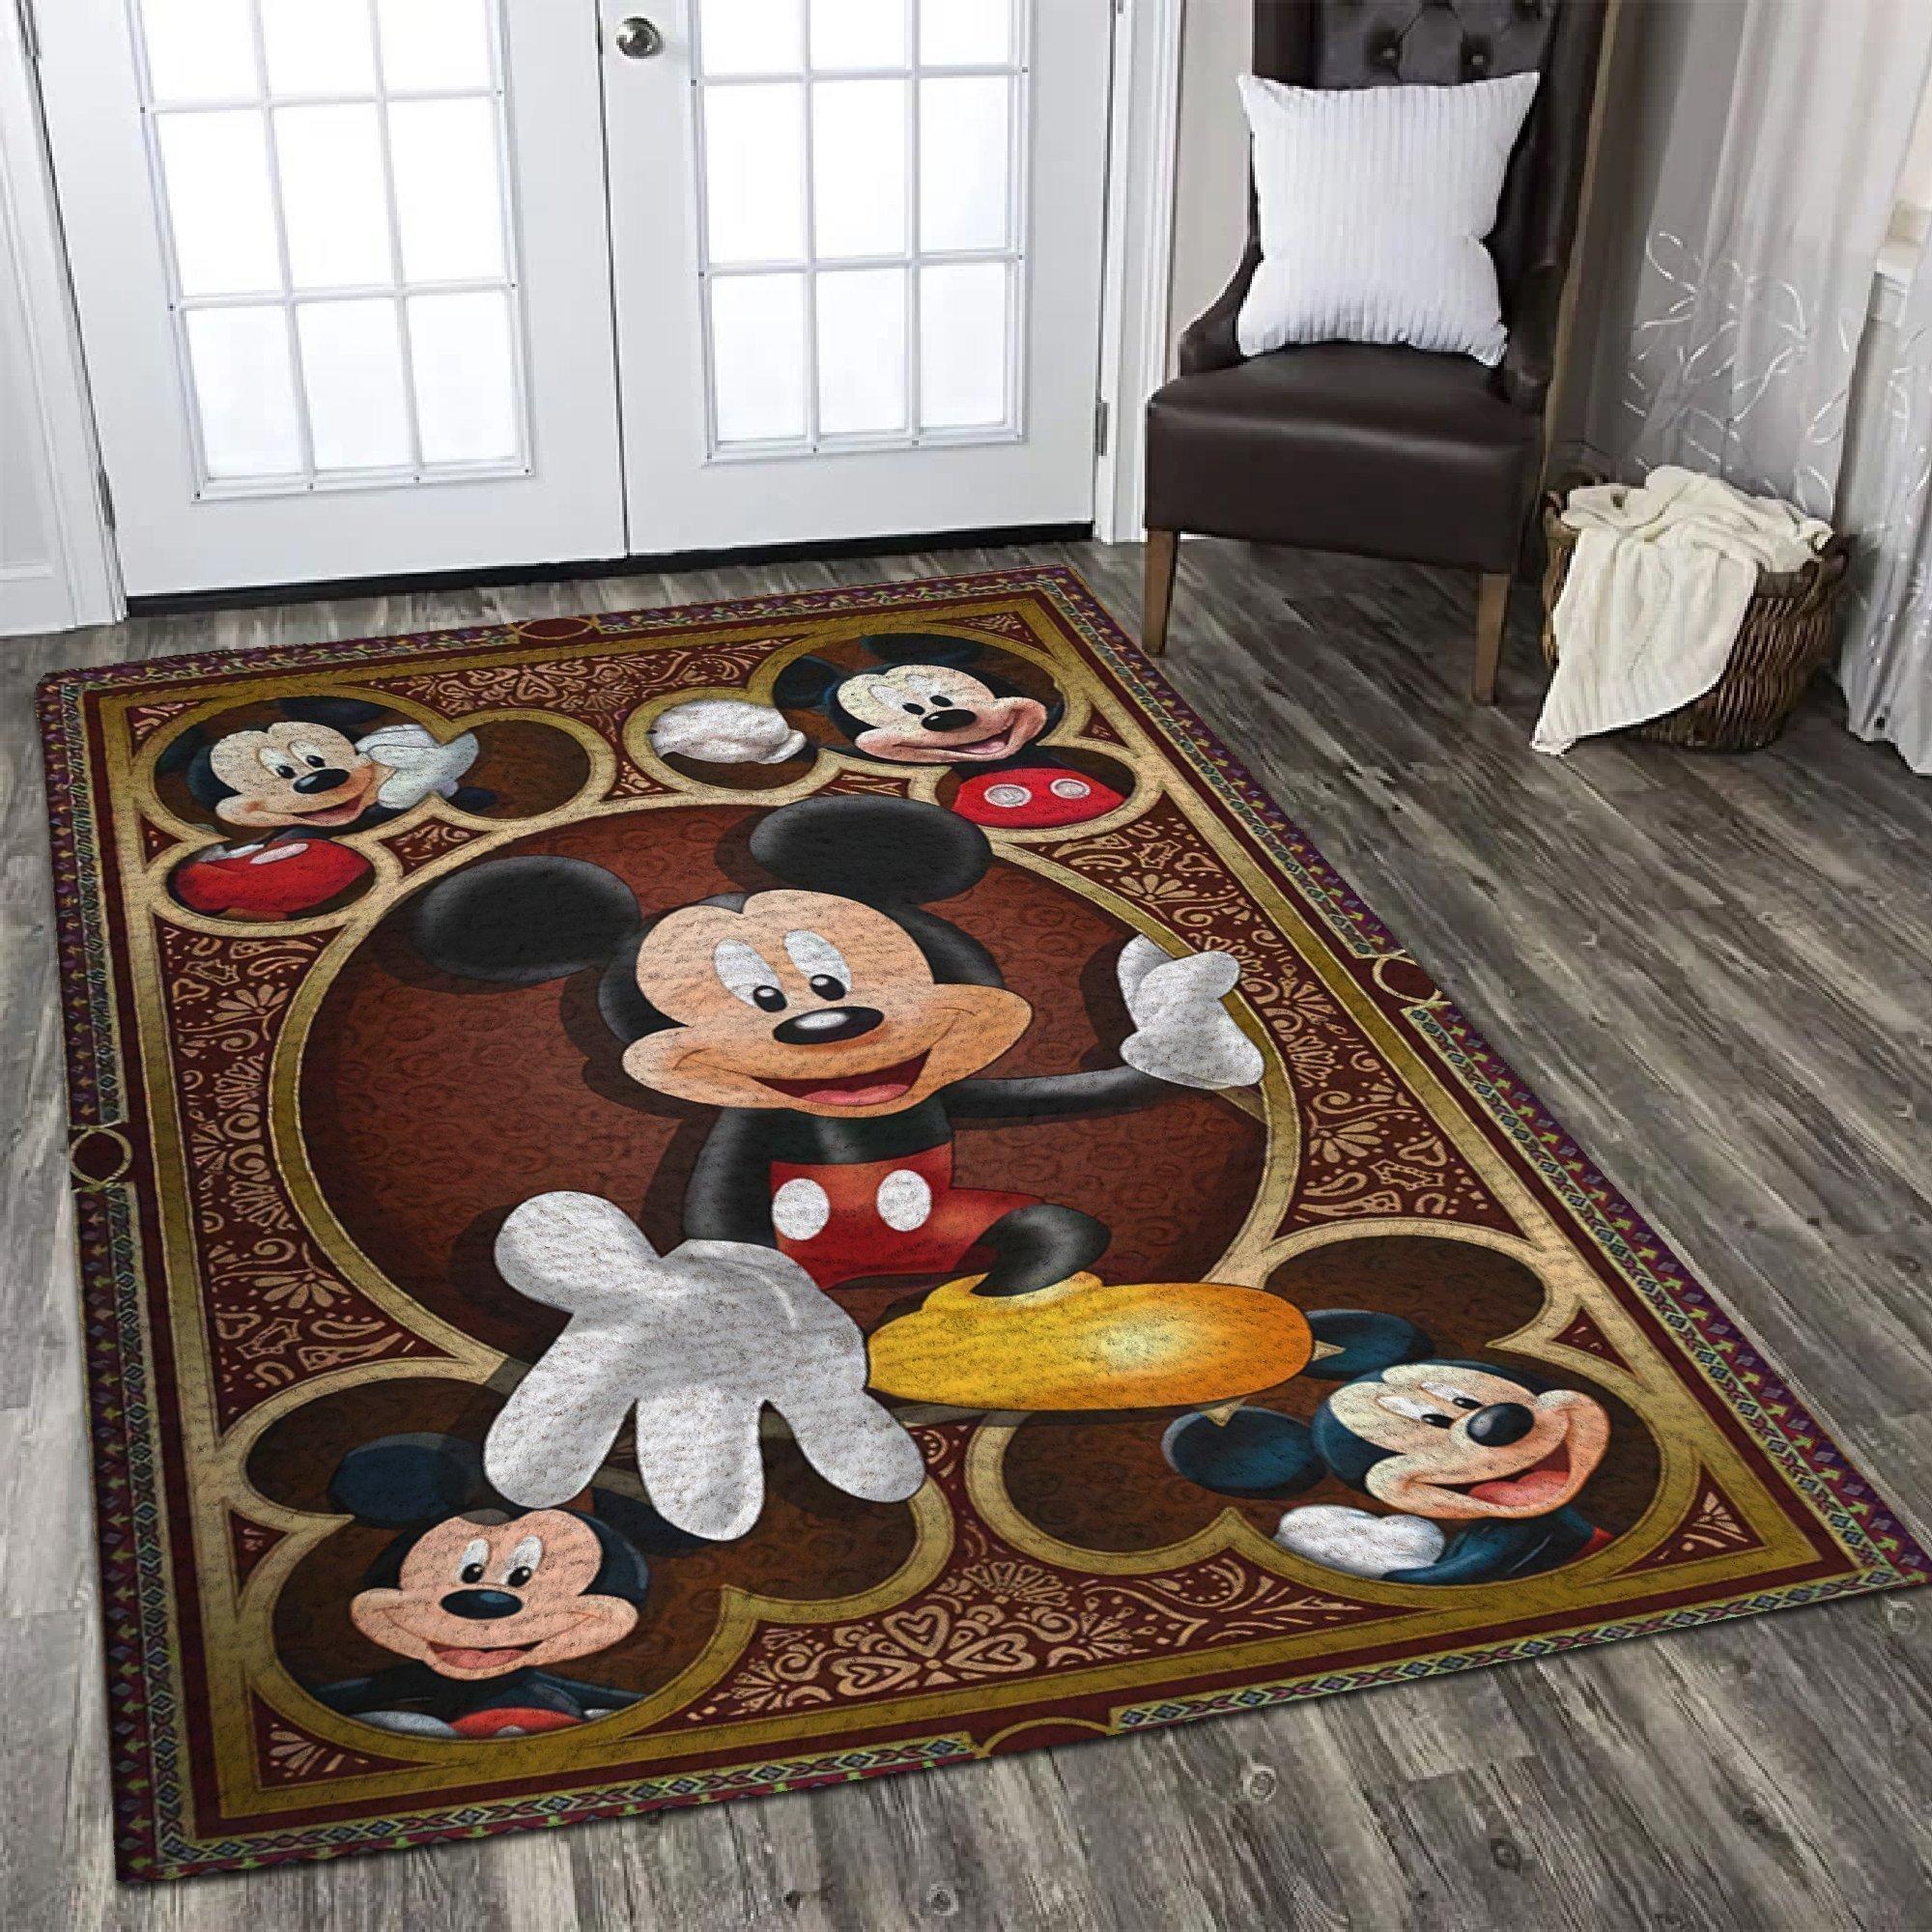 Mickey Mouse rug 2 - bbs